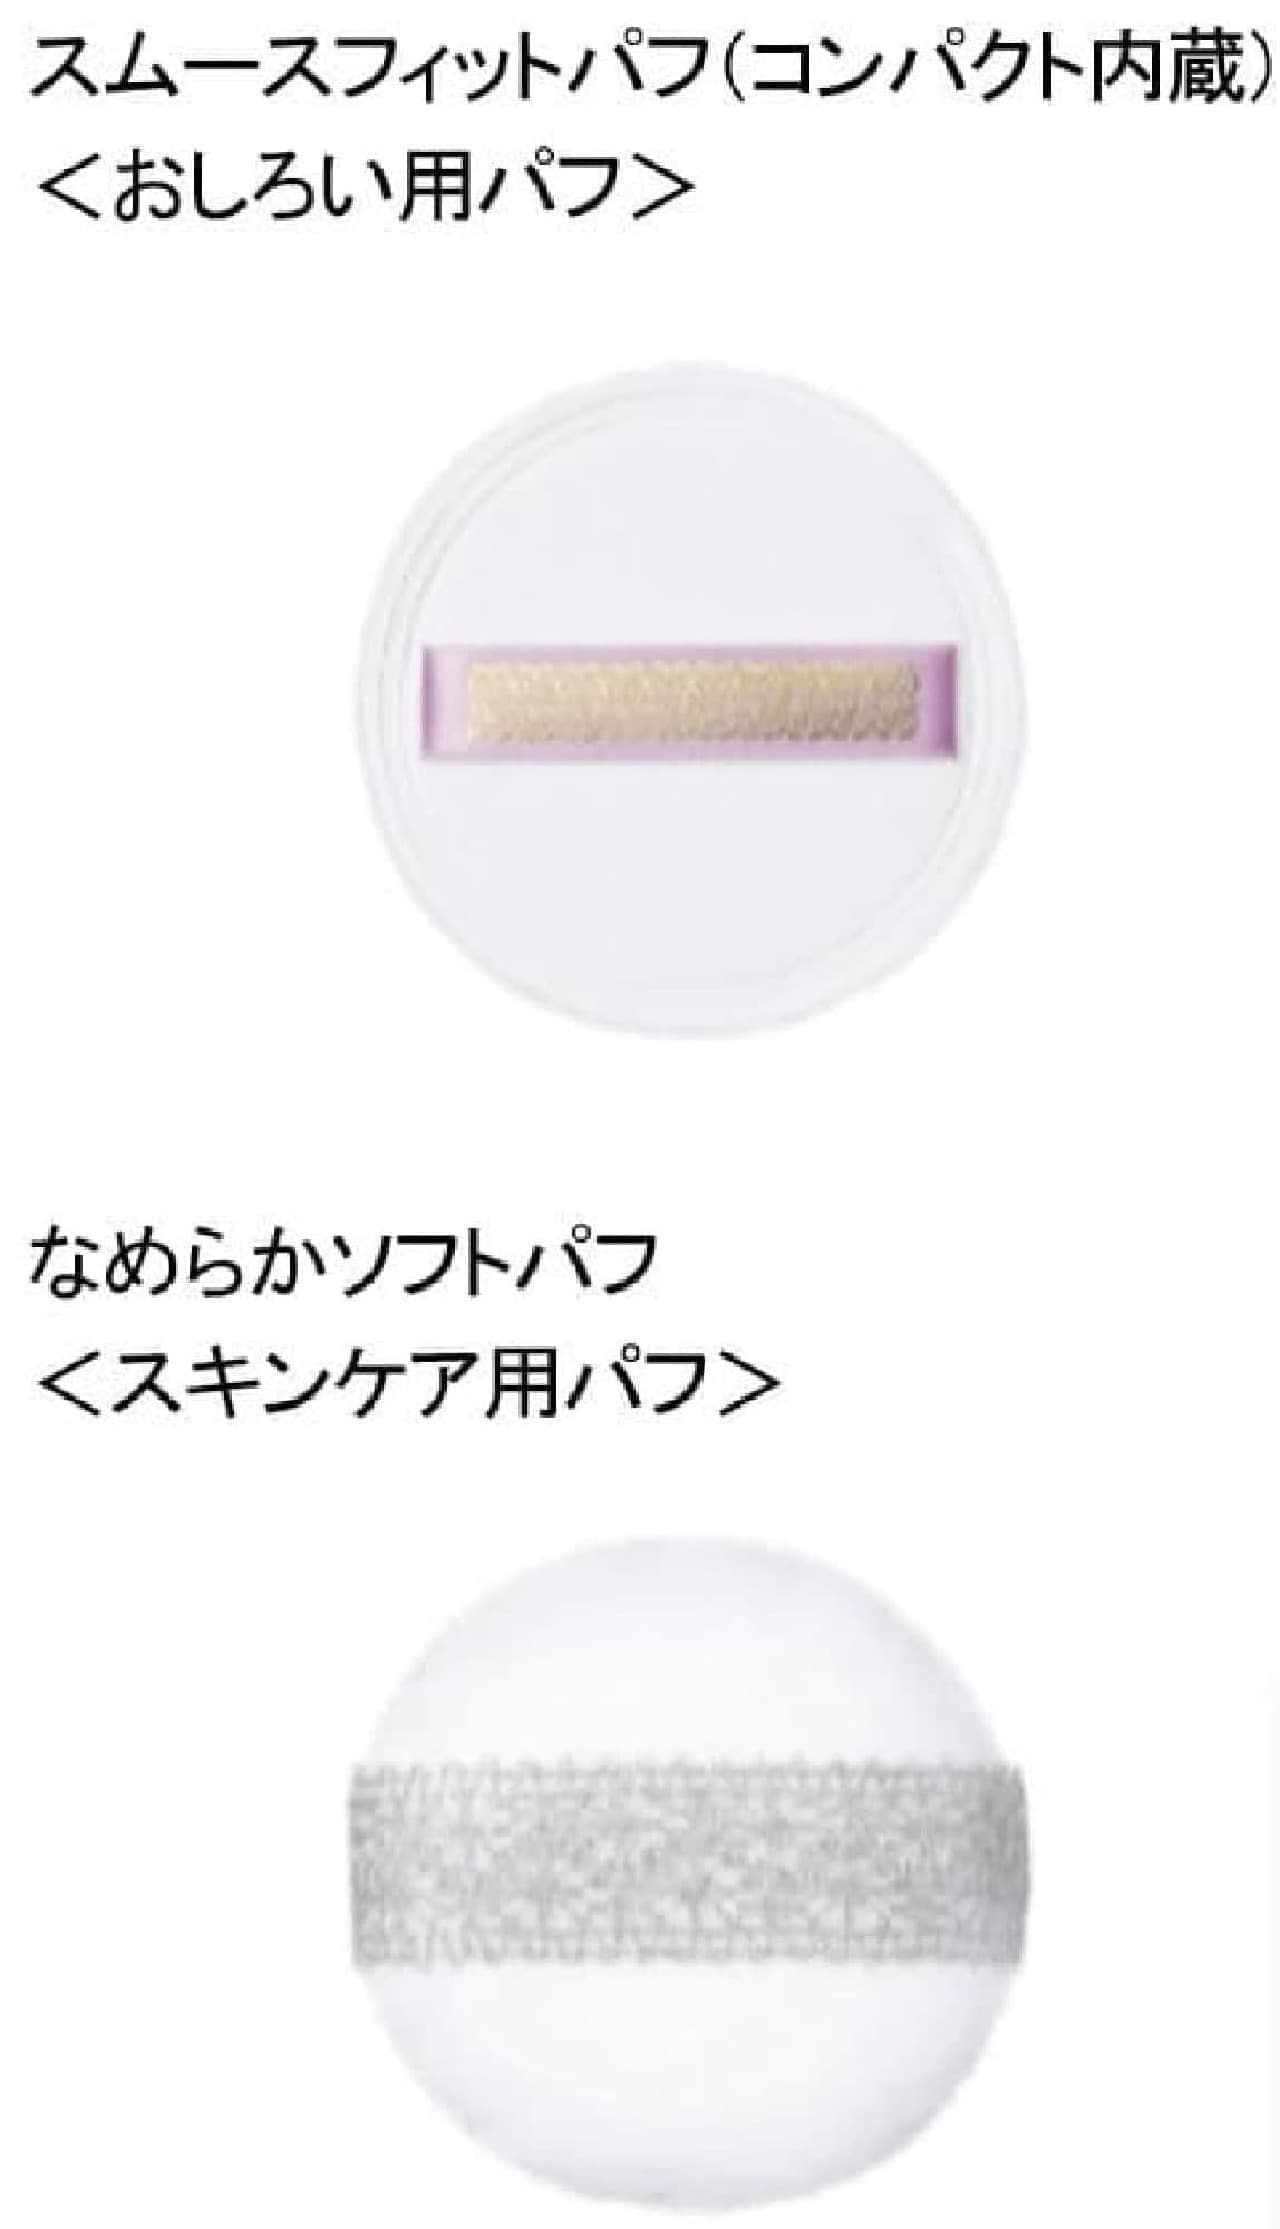 Shiseido "Snow Beauty Brightening Skin Care Powder B